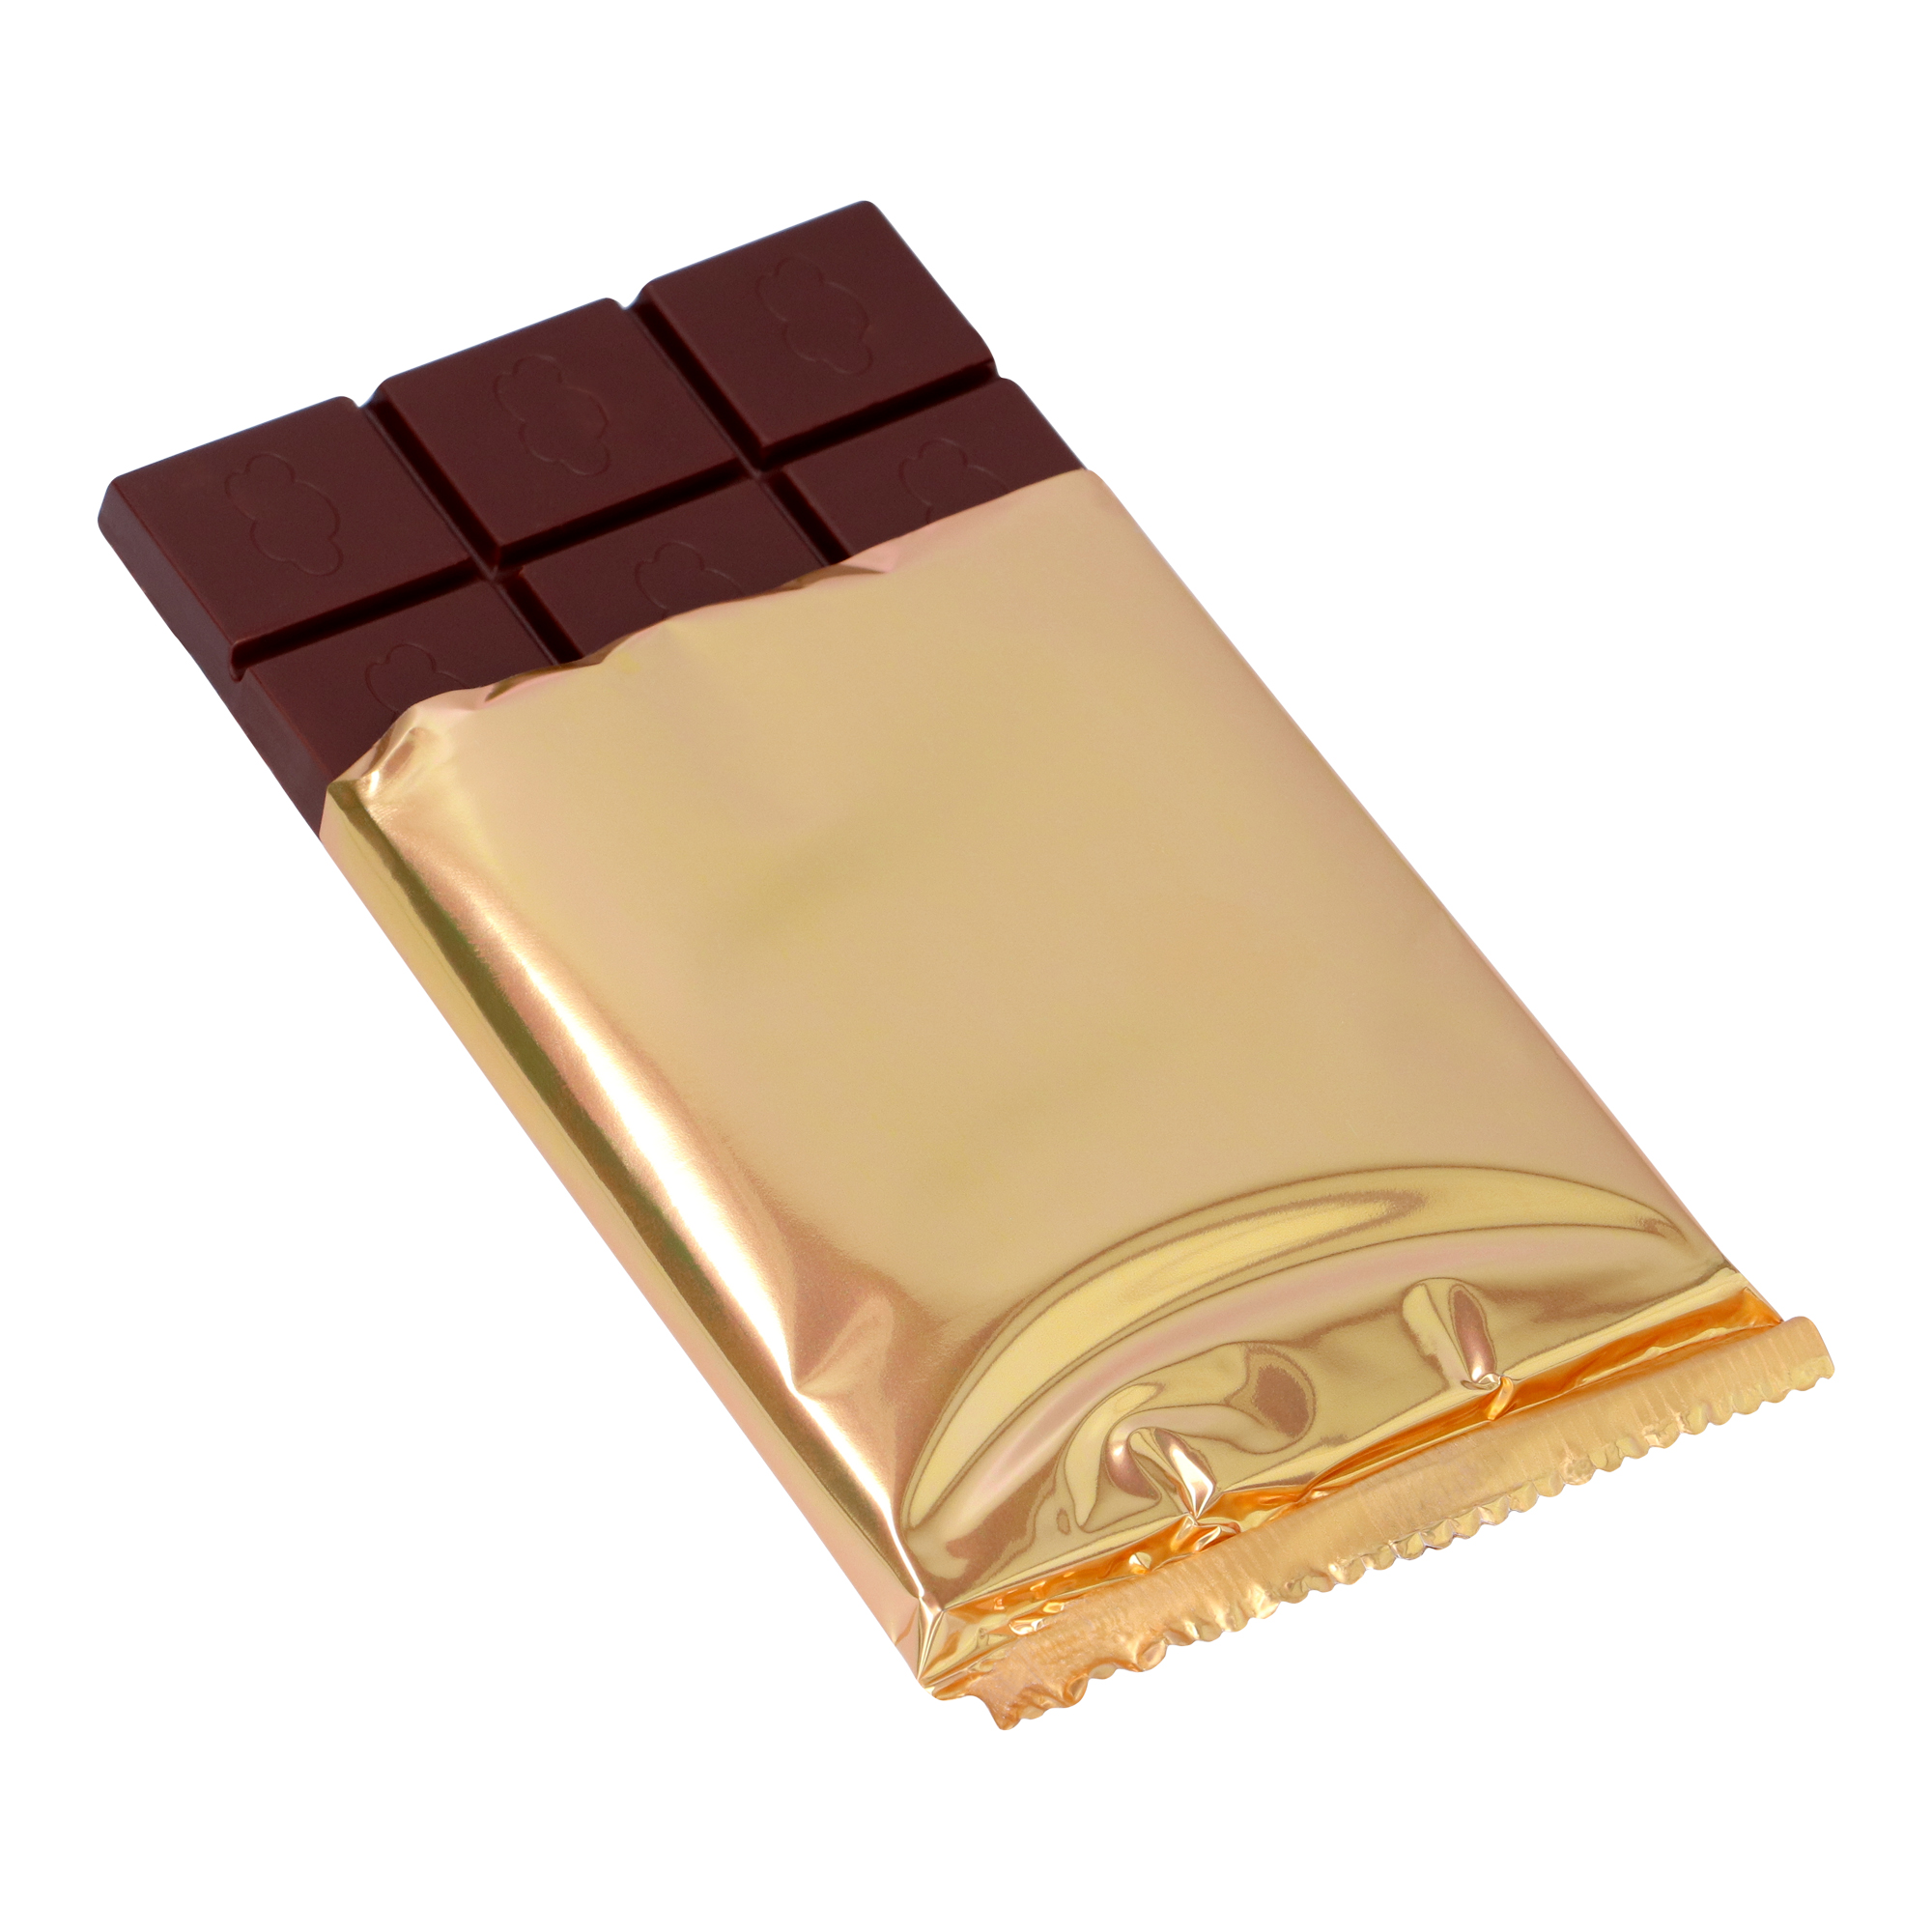 Dark chocolate cacao nibs 6